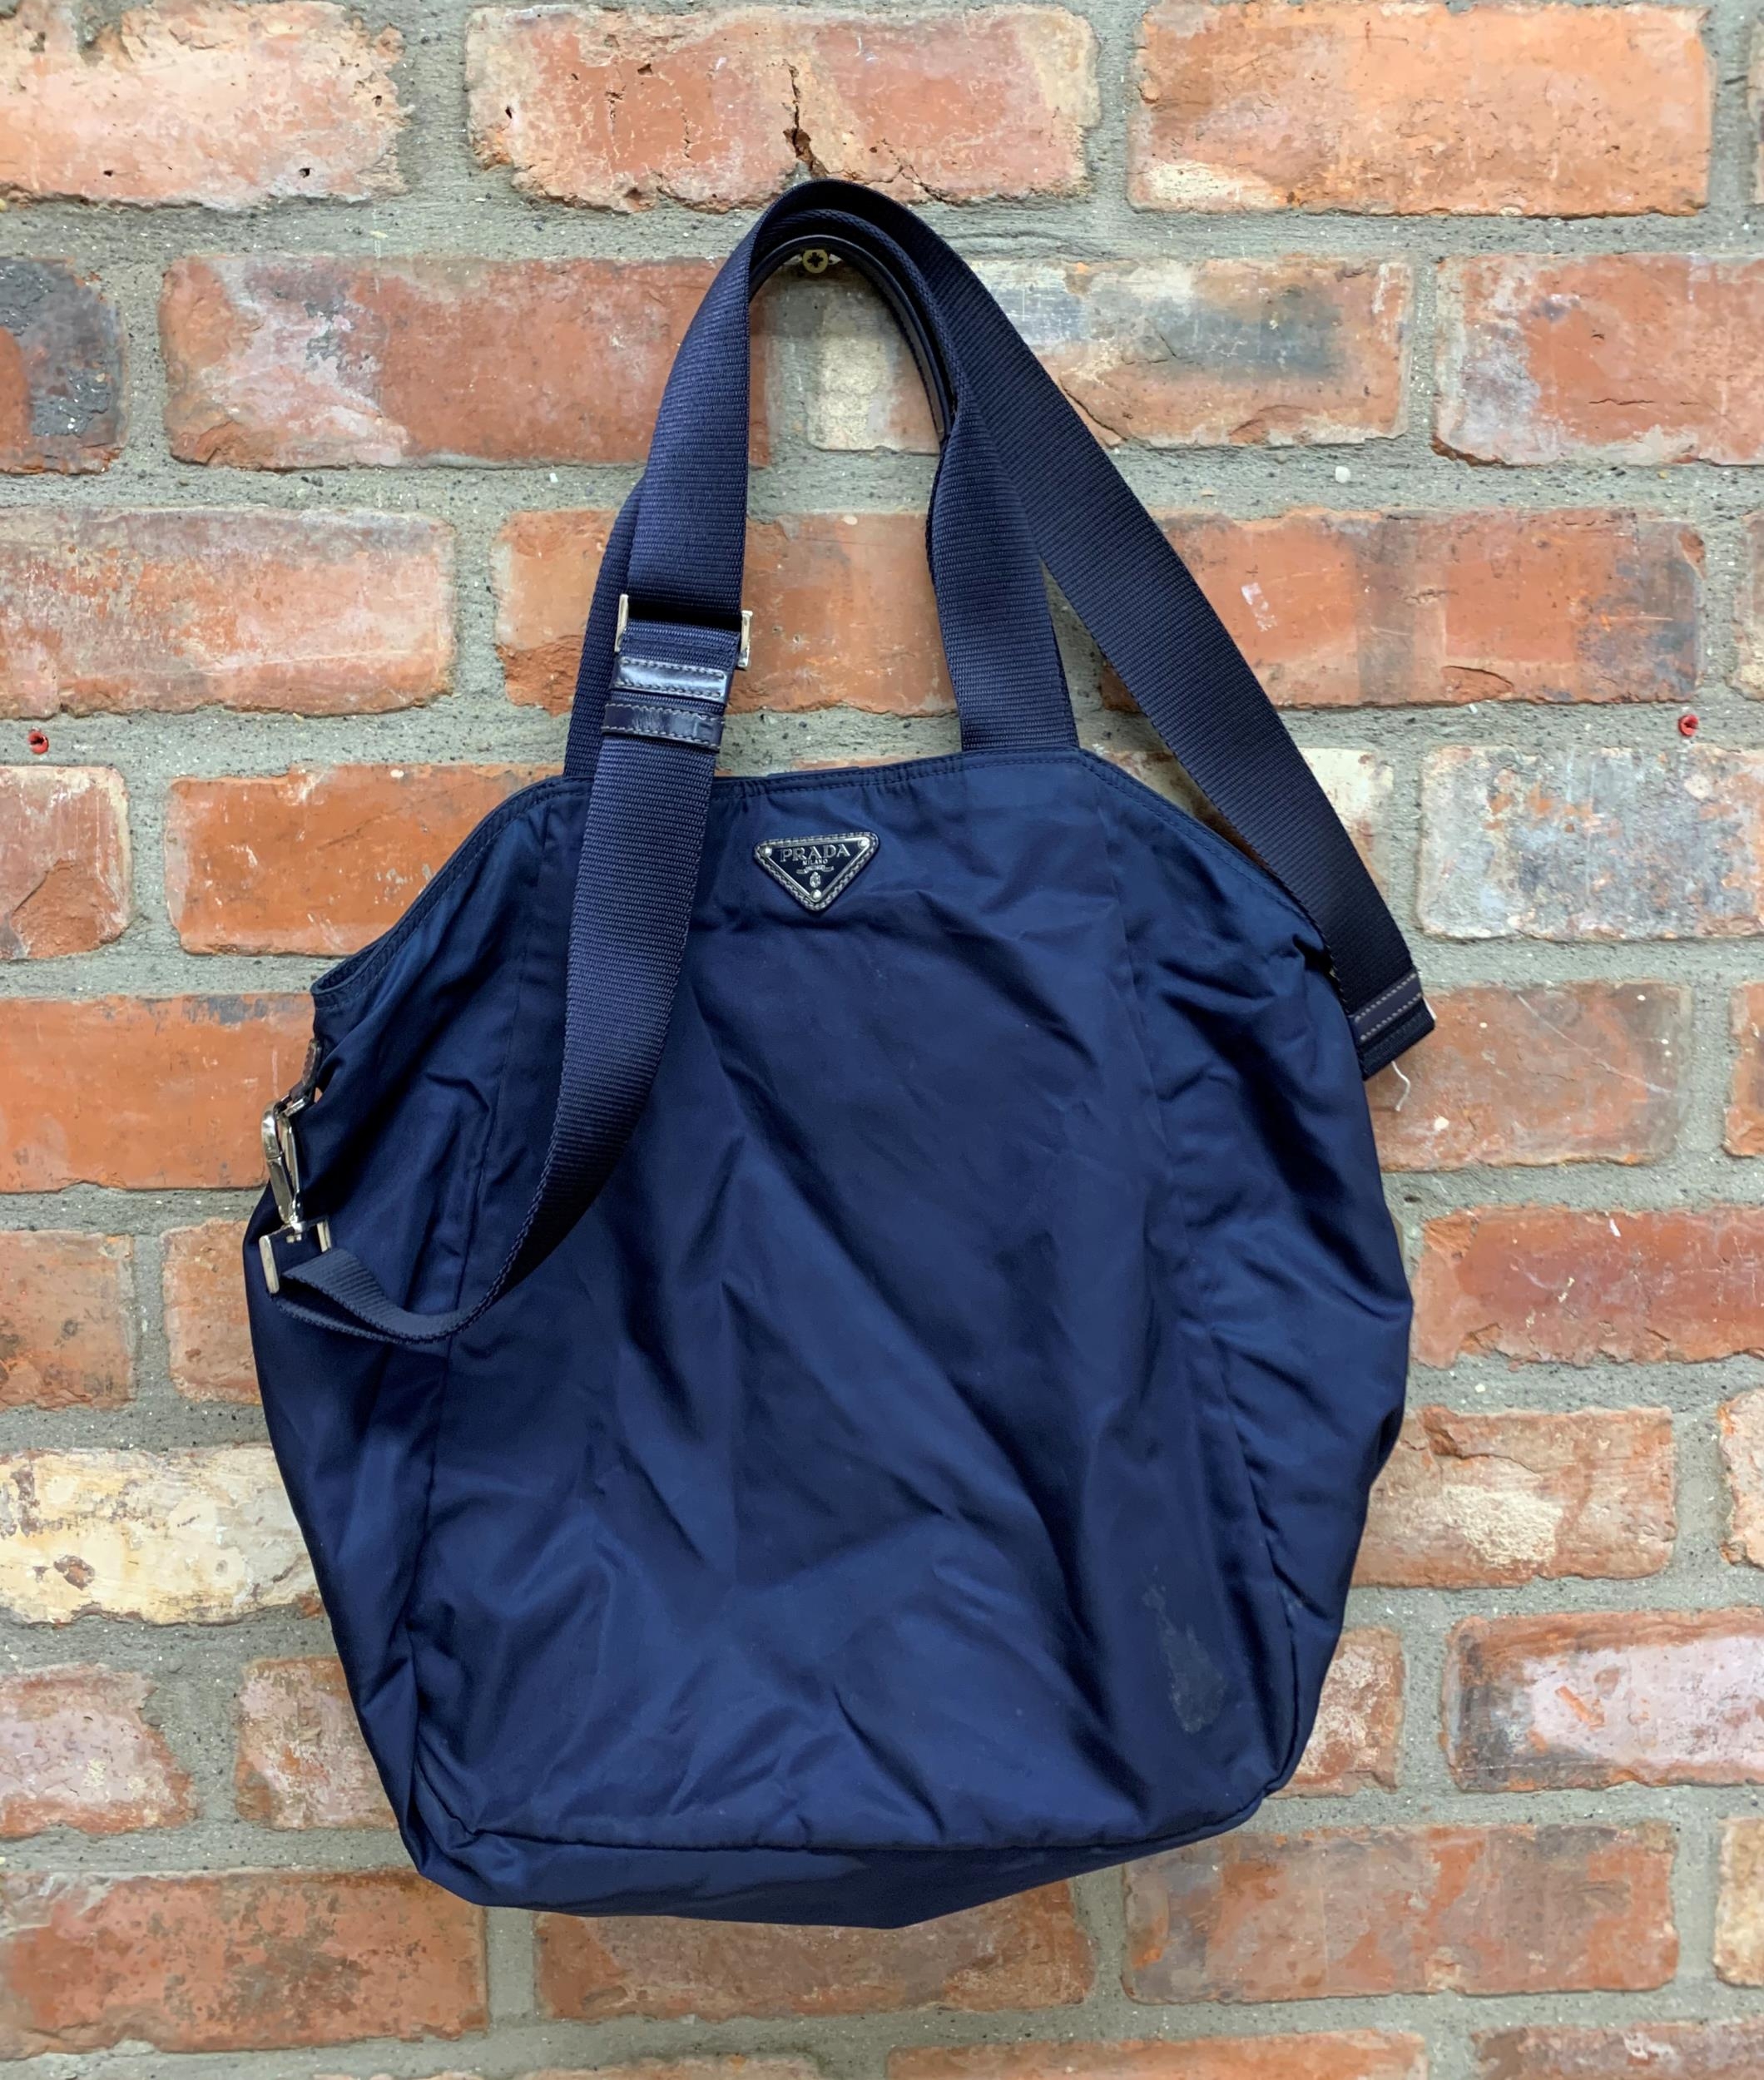 Prada - navy blue nylon shopping bag with detachable shoulder strap and original dust bag